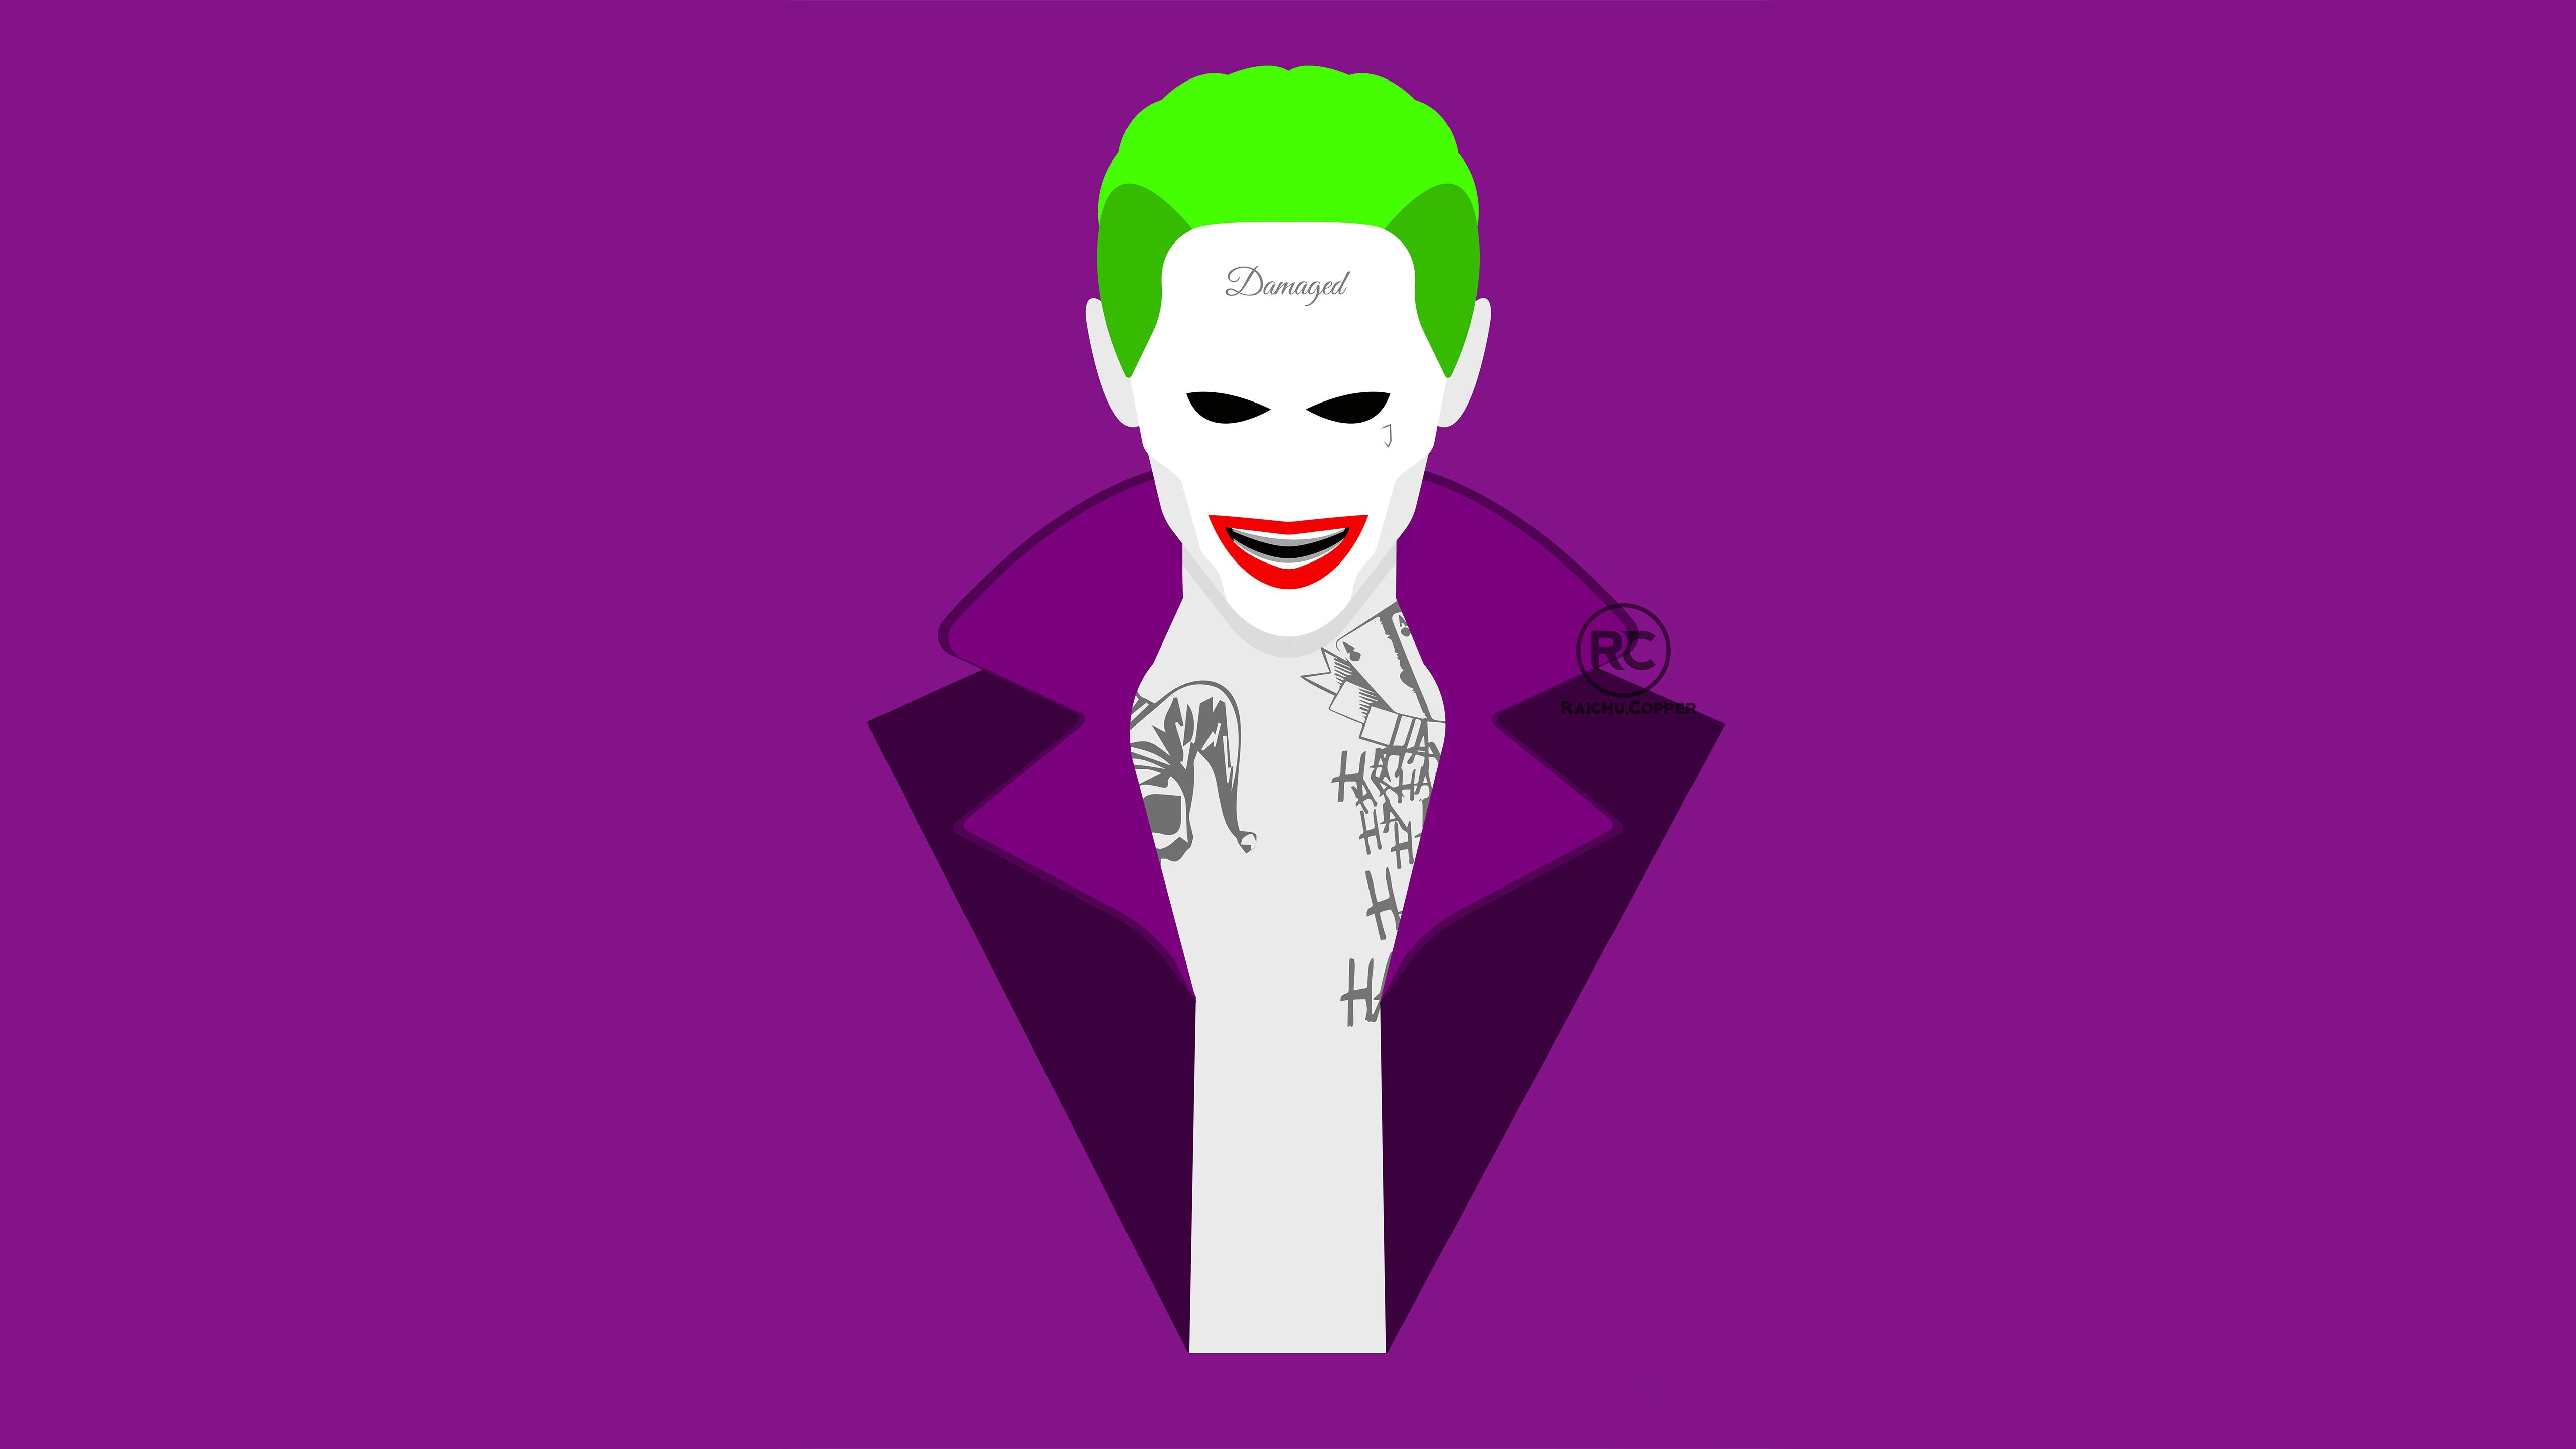 Jared Leto Joker Image